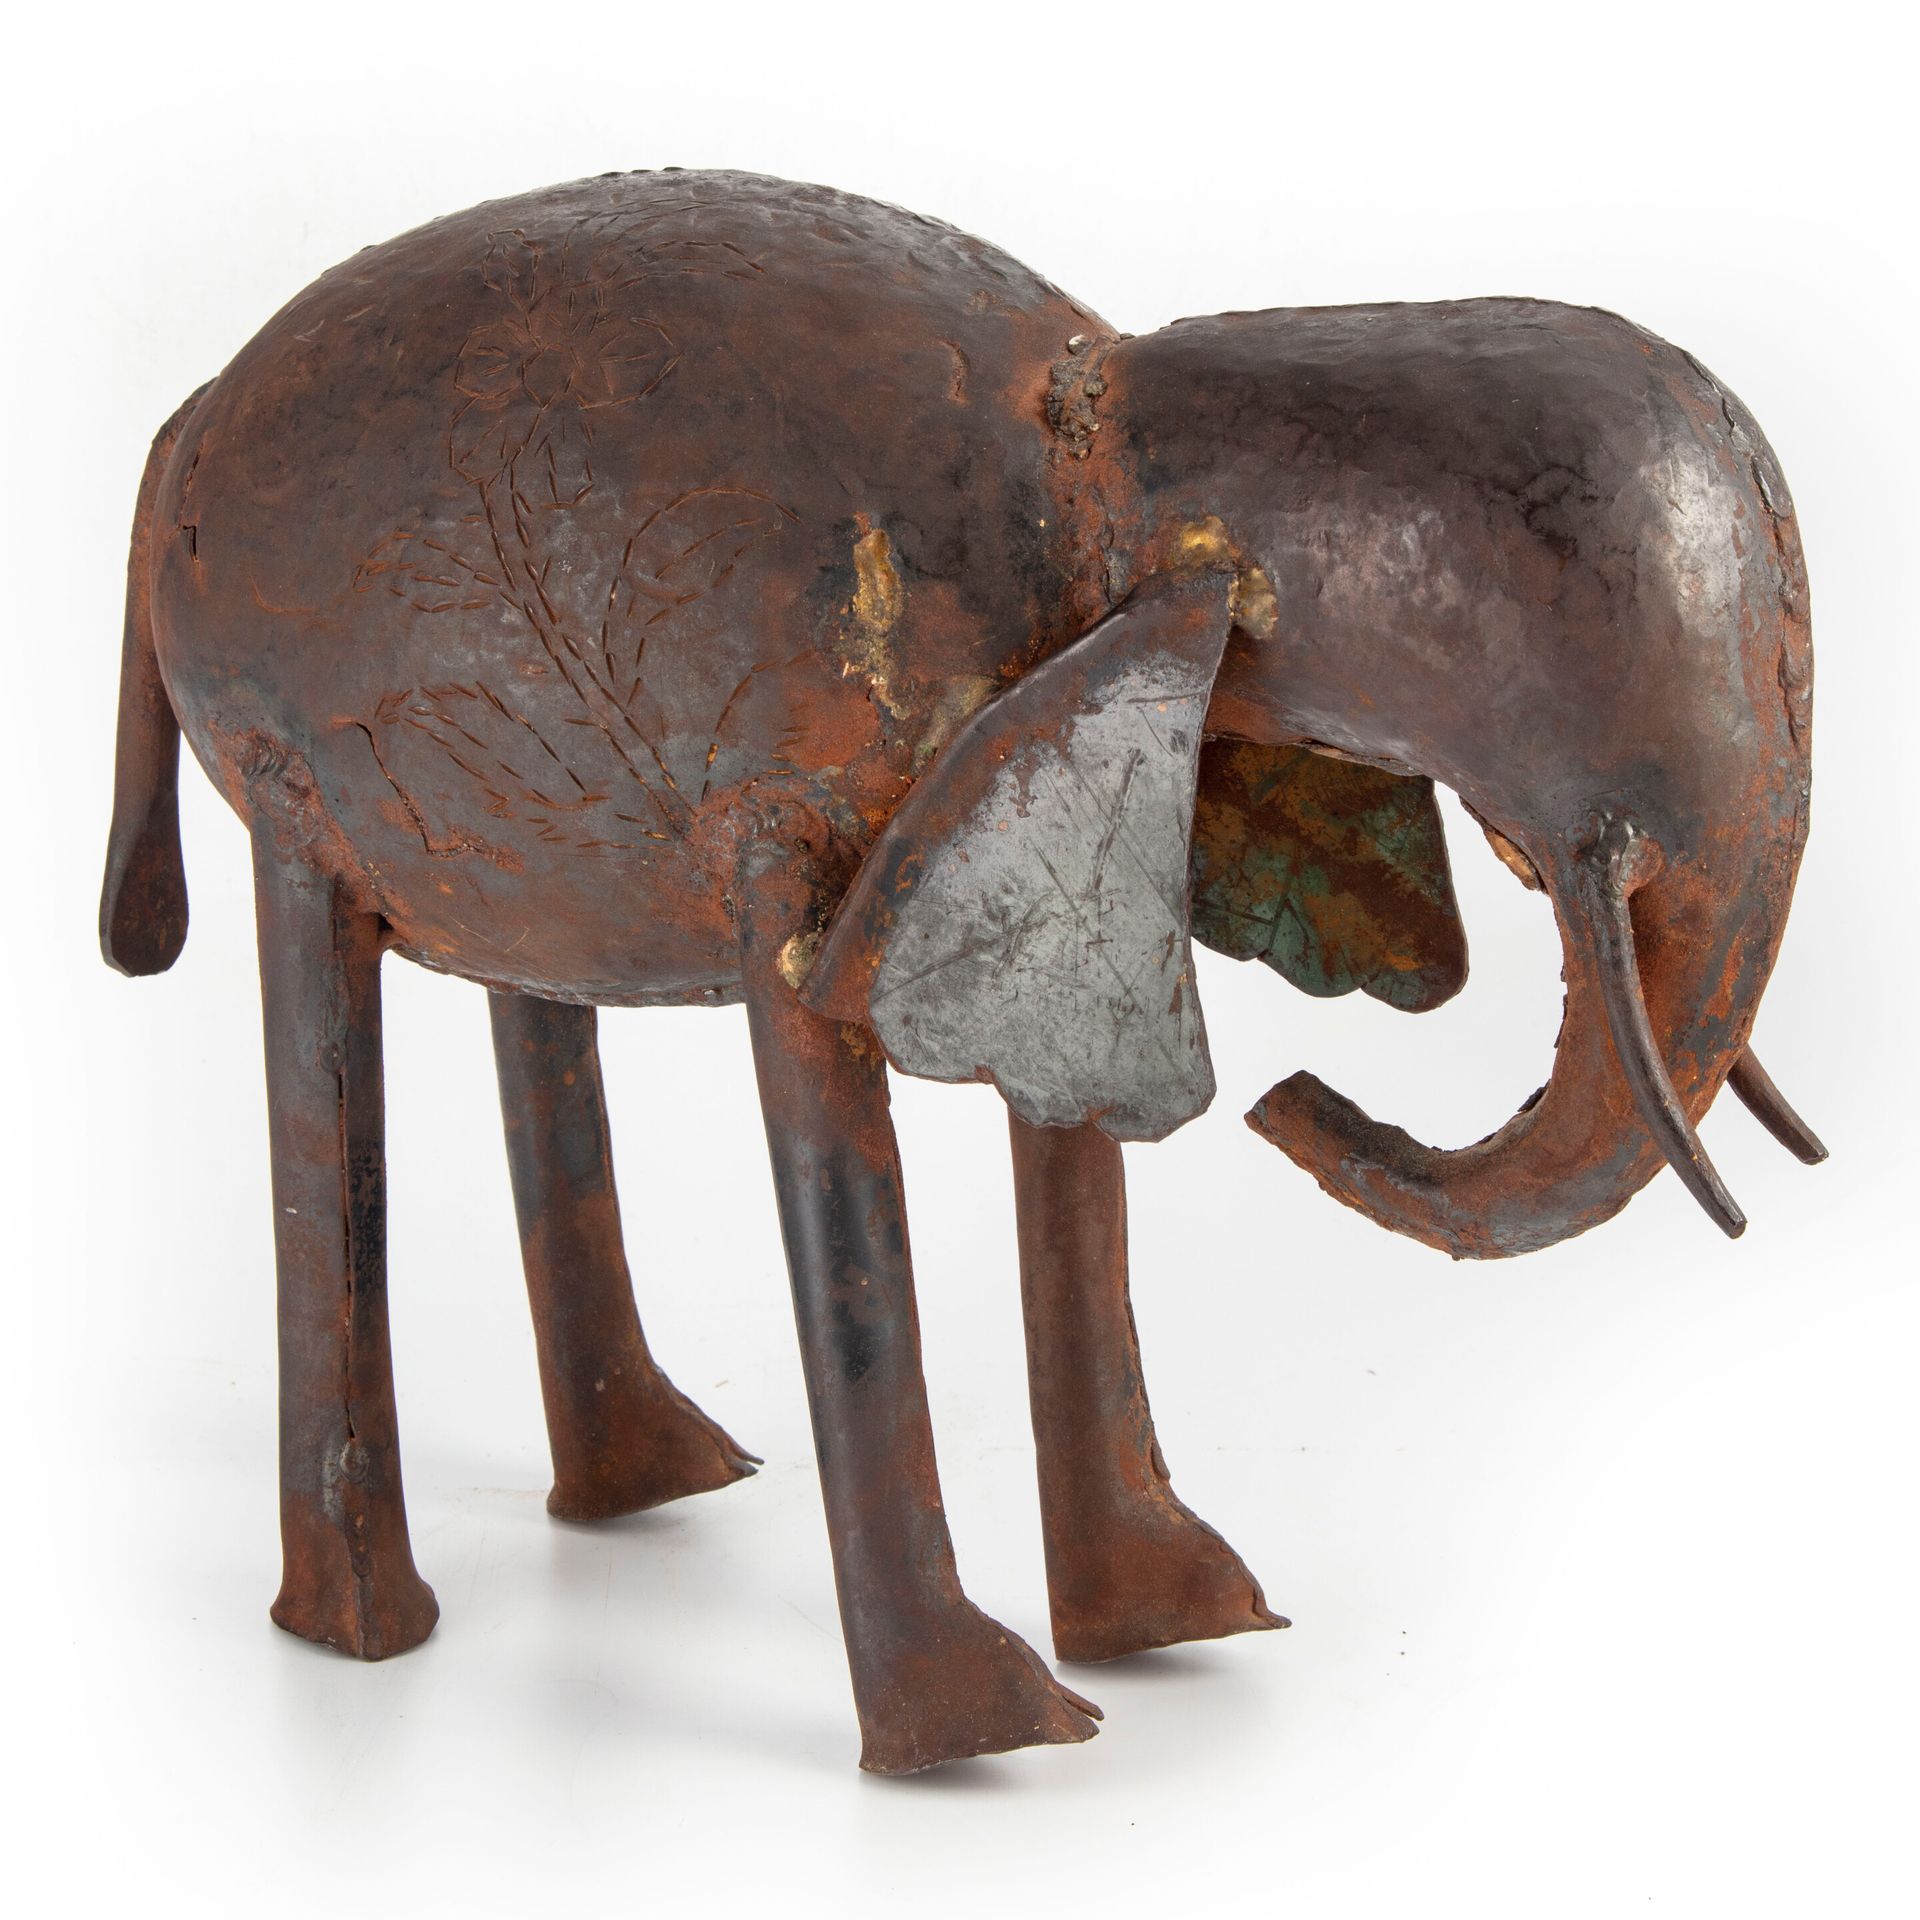 Null 锤制金属大象雕像。印度的工作

H.28 - L 34 cm